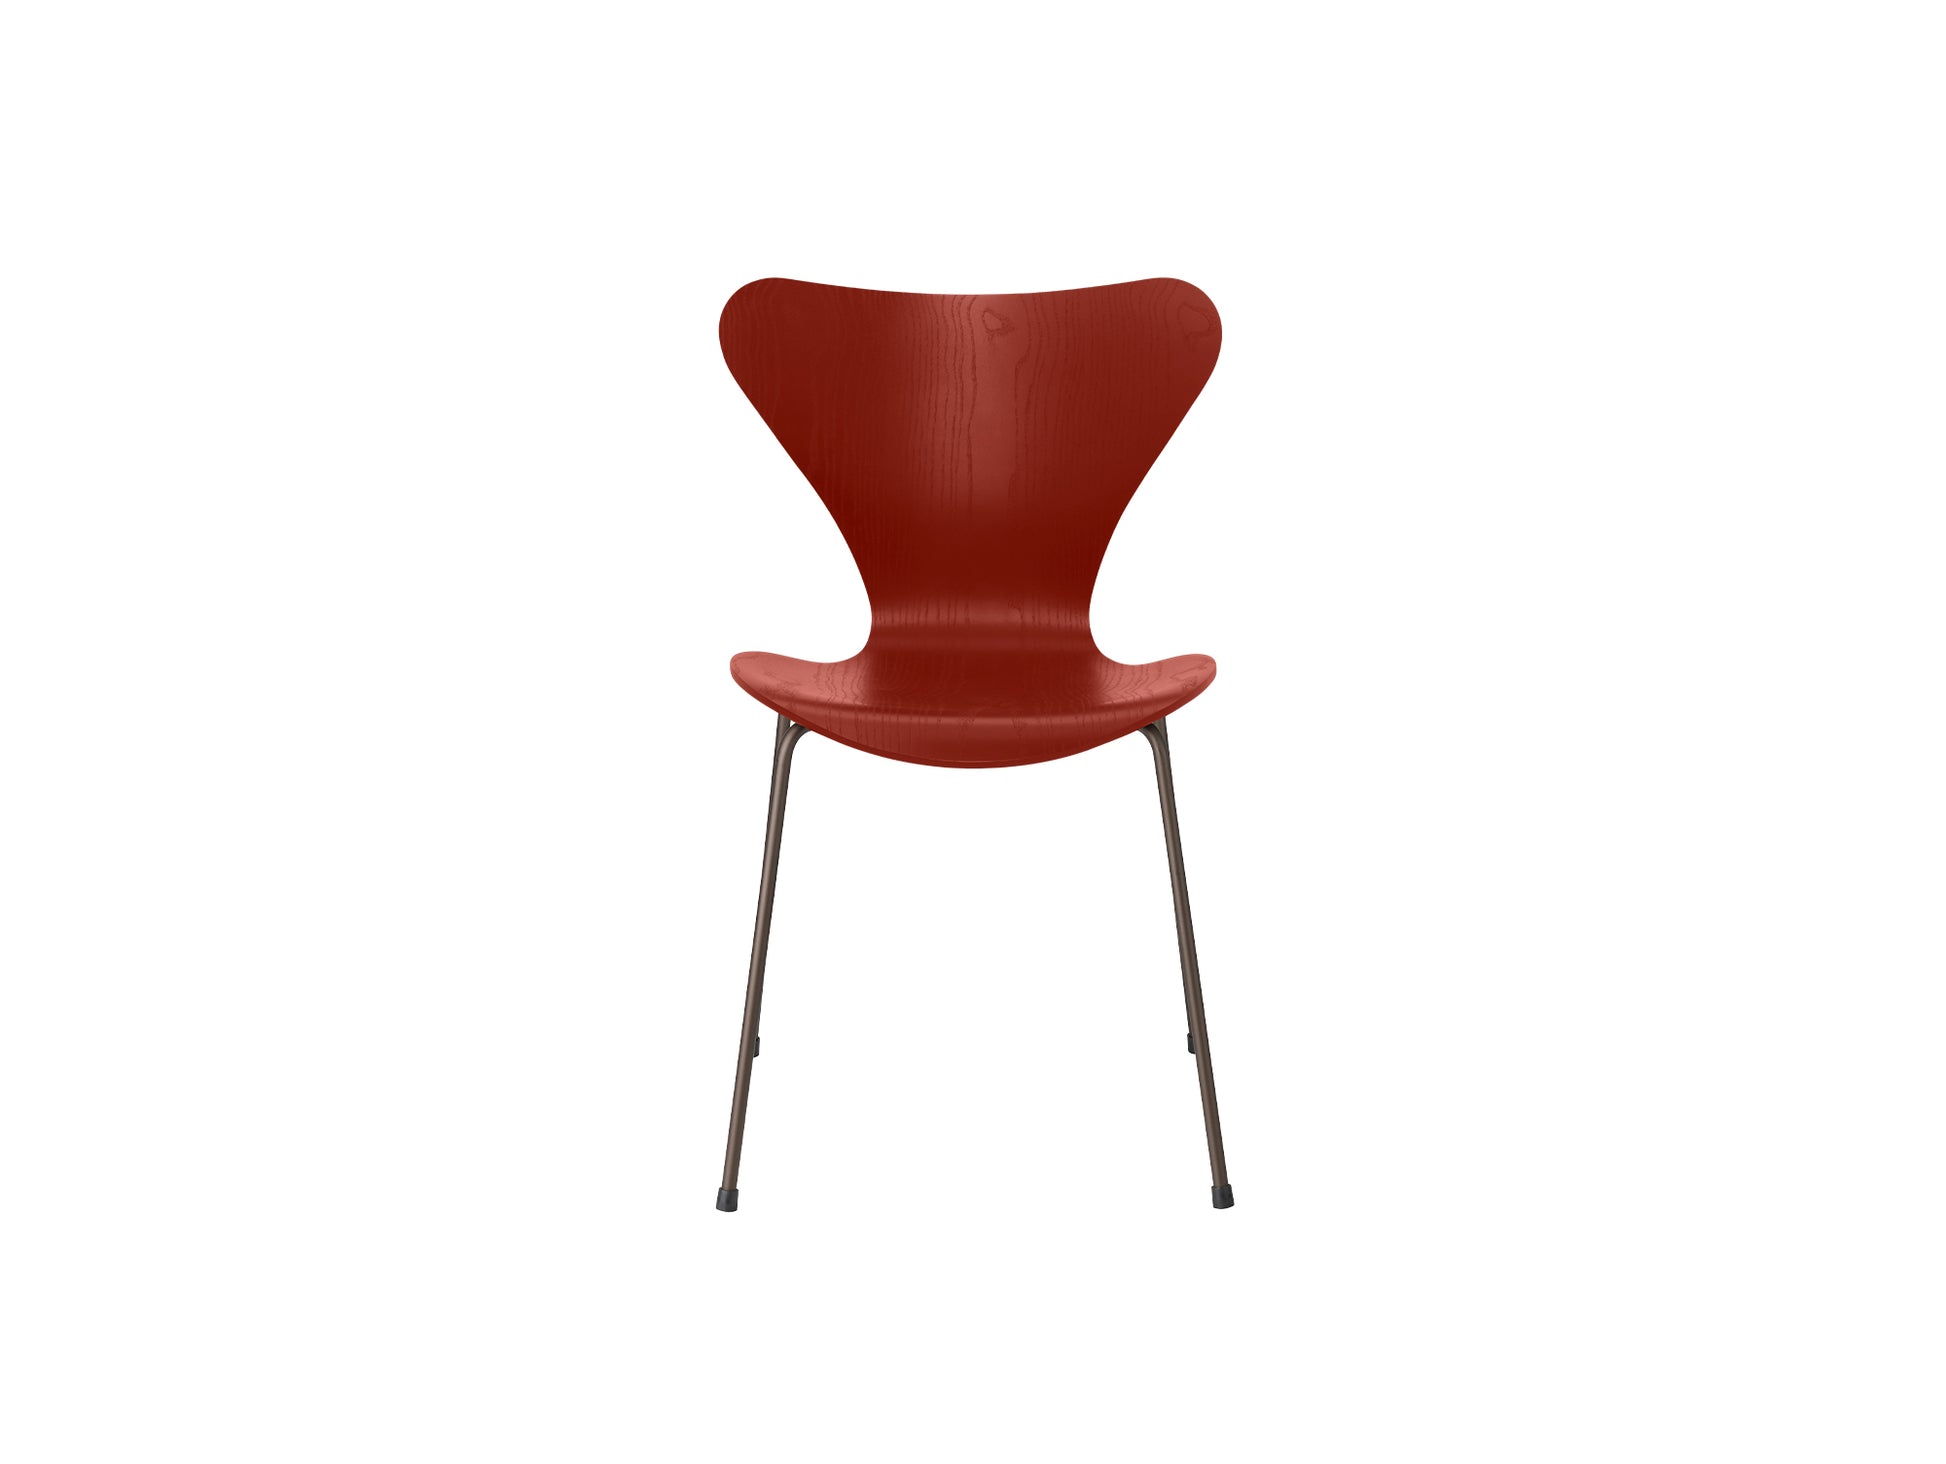 Series 7™ 3107 Dining Chair by Fritz Hansen - Venetian Red Coloured Ash Veneer Shell / Brown Bronze Steel